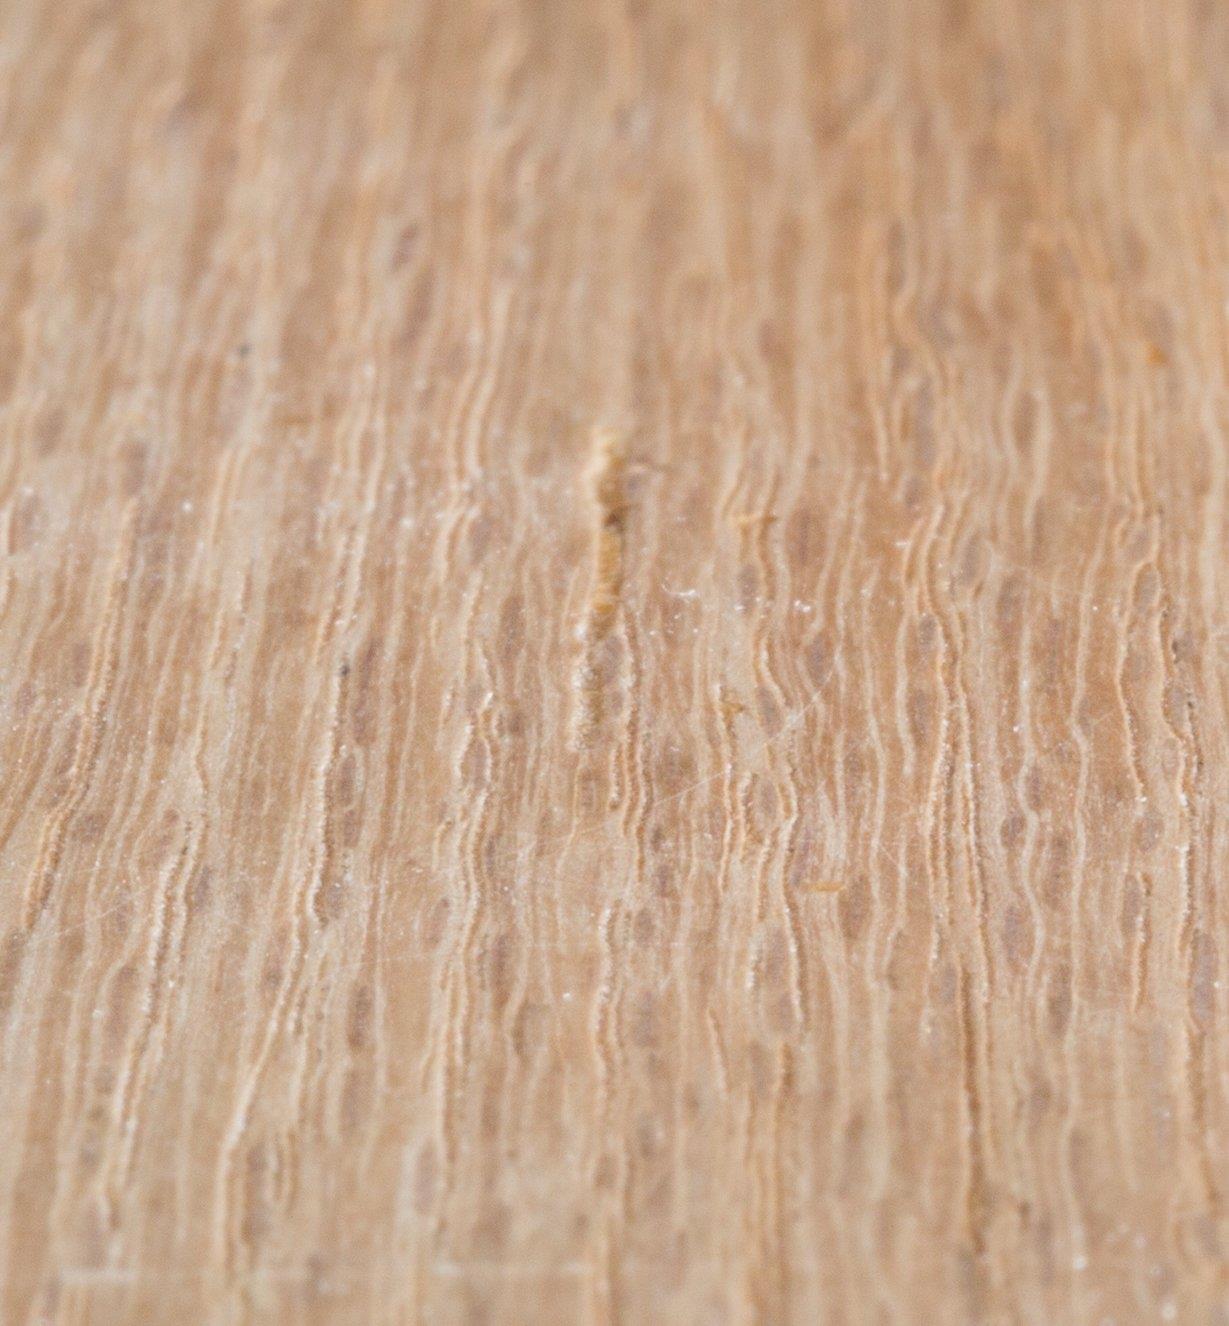 Close-up of wood surface after Aqua Coat application